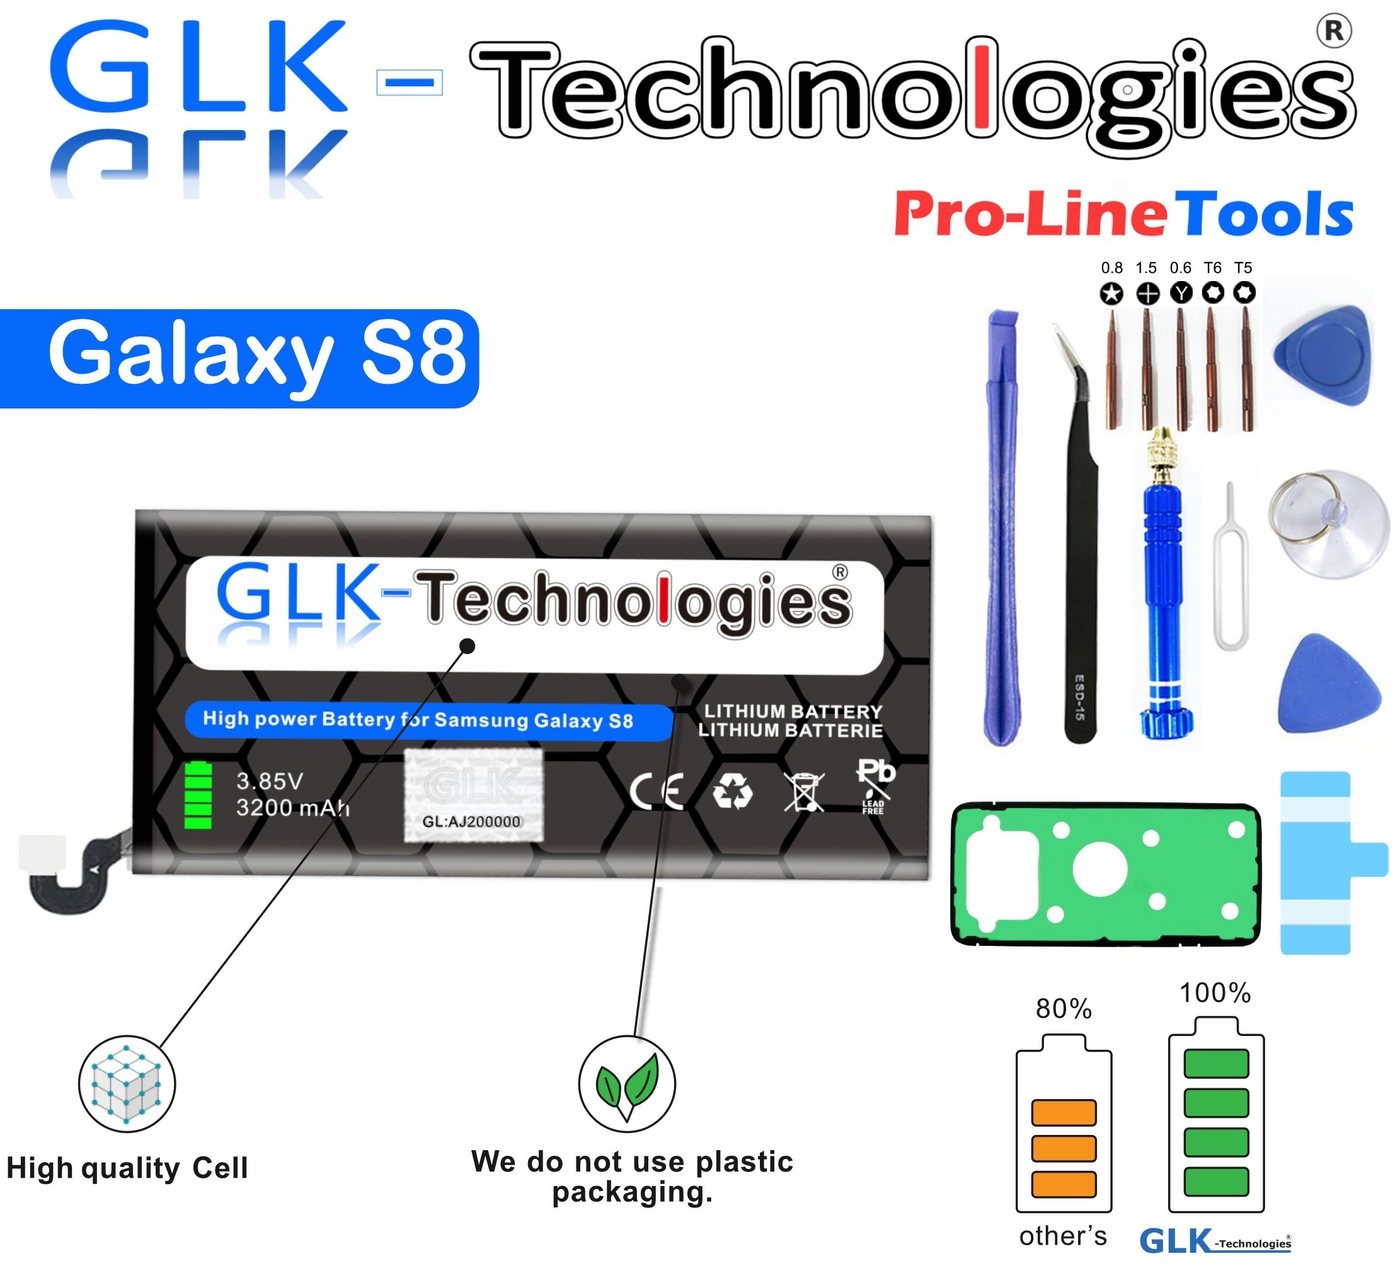 GLK-Technologies High Power Ersatzakku kompatibel mit Samsung Galaxy S8 SM-G950F EB-BG950BBE, Original GLK-Technologies Battery, Accu, 3200 mAh, inklusive Werkzeugset Smartphone-Akku 3200 mAh (3.85 V)